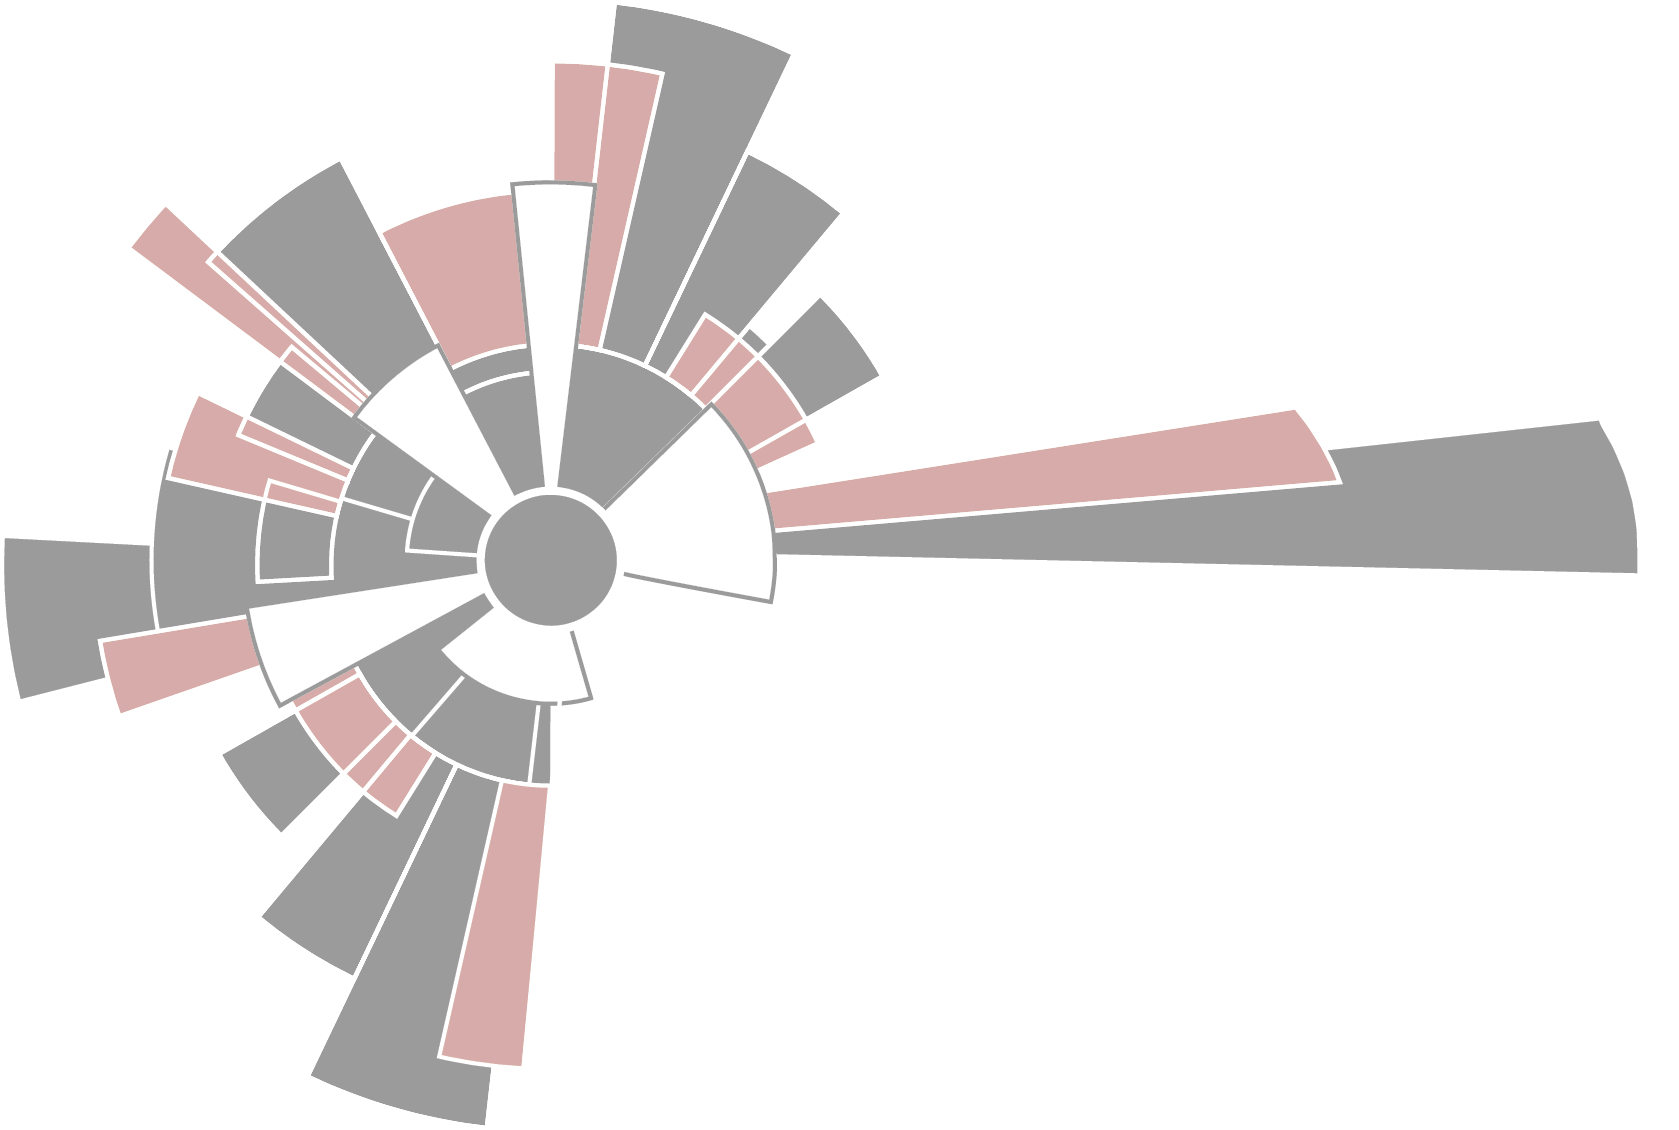 The Yokohama Theatre Group